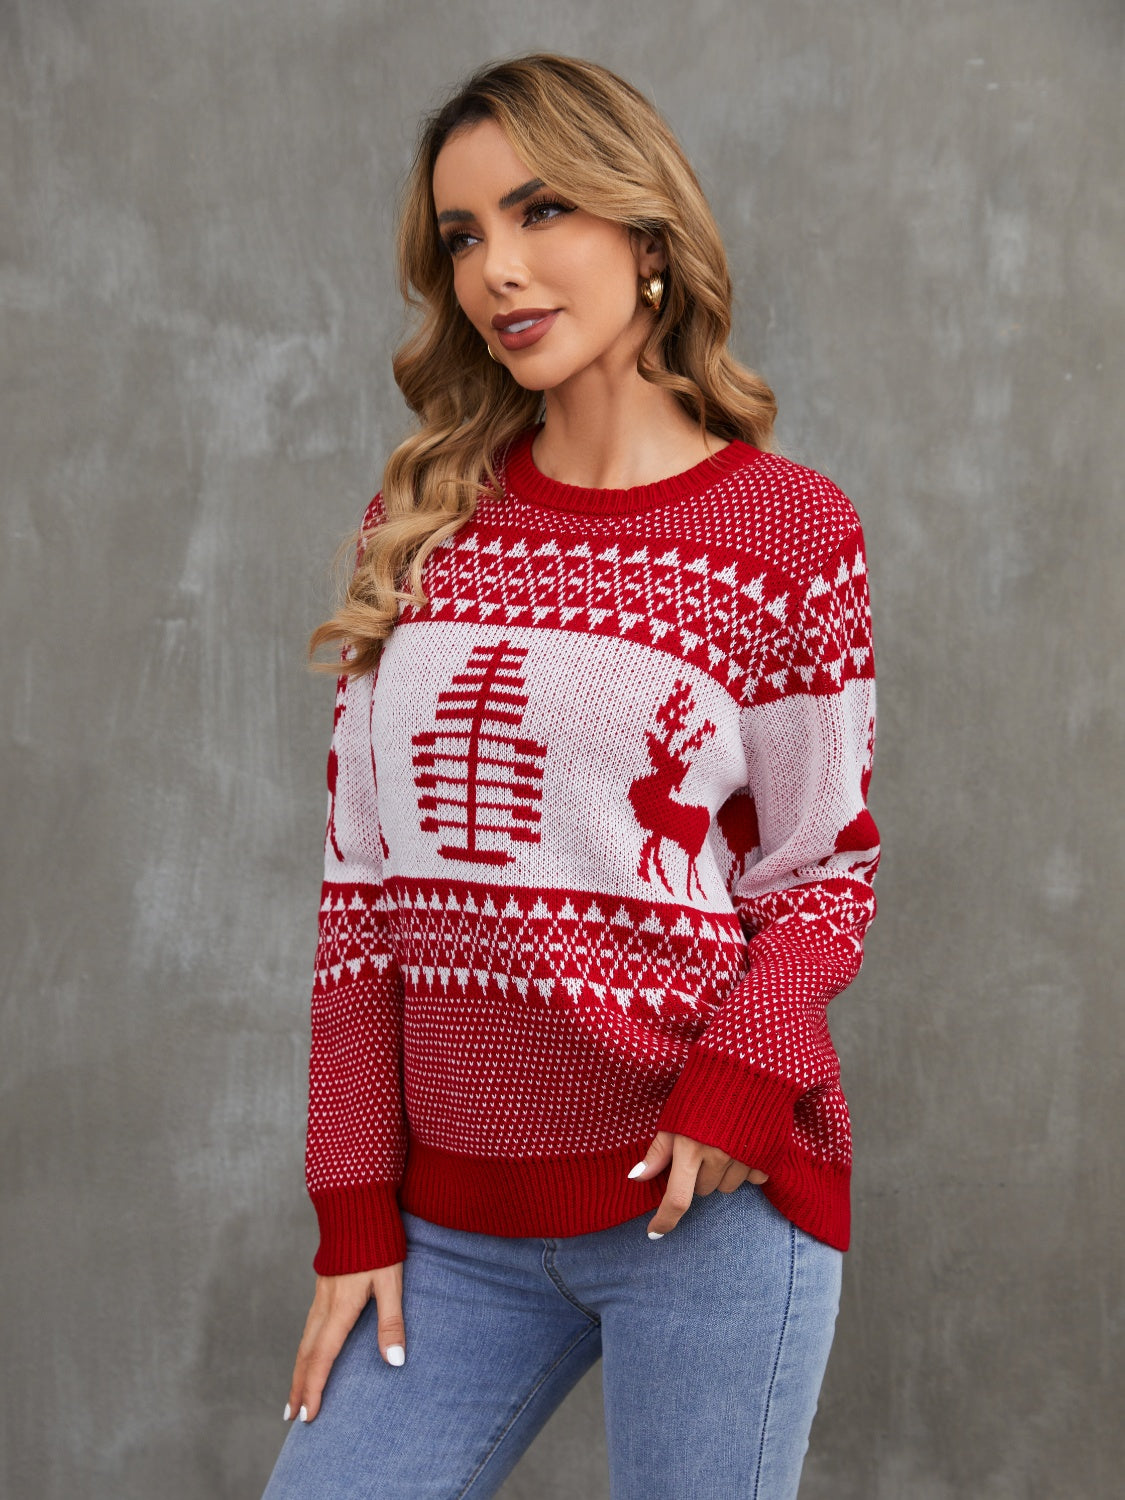 Lids Louisville Cardinals Concepts Sport Ugly Sweater Long Sleeve